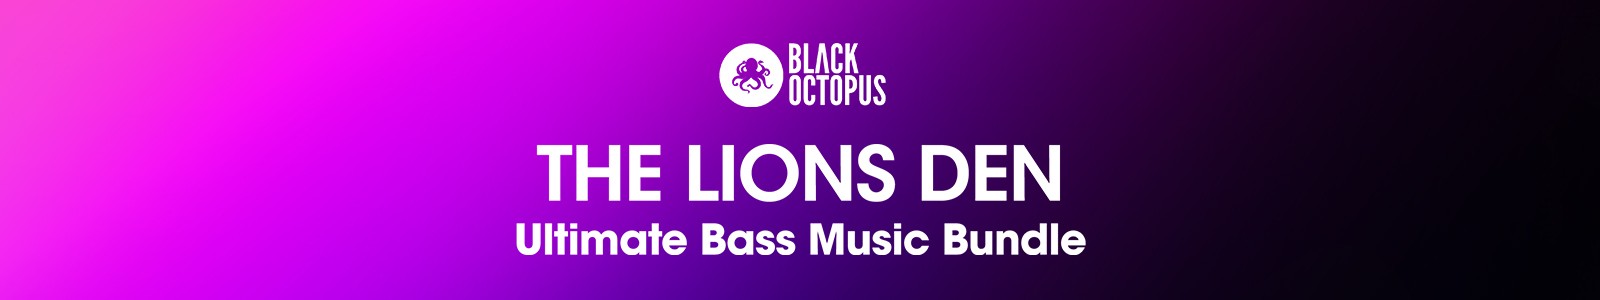 Lions Den Ultimate Bass Music Bundle by Black Octopus